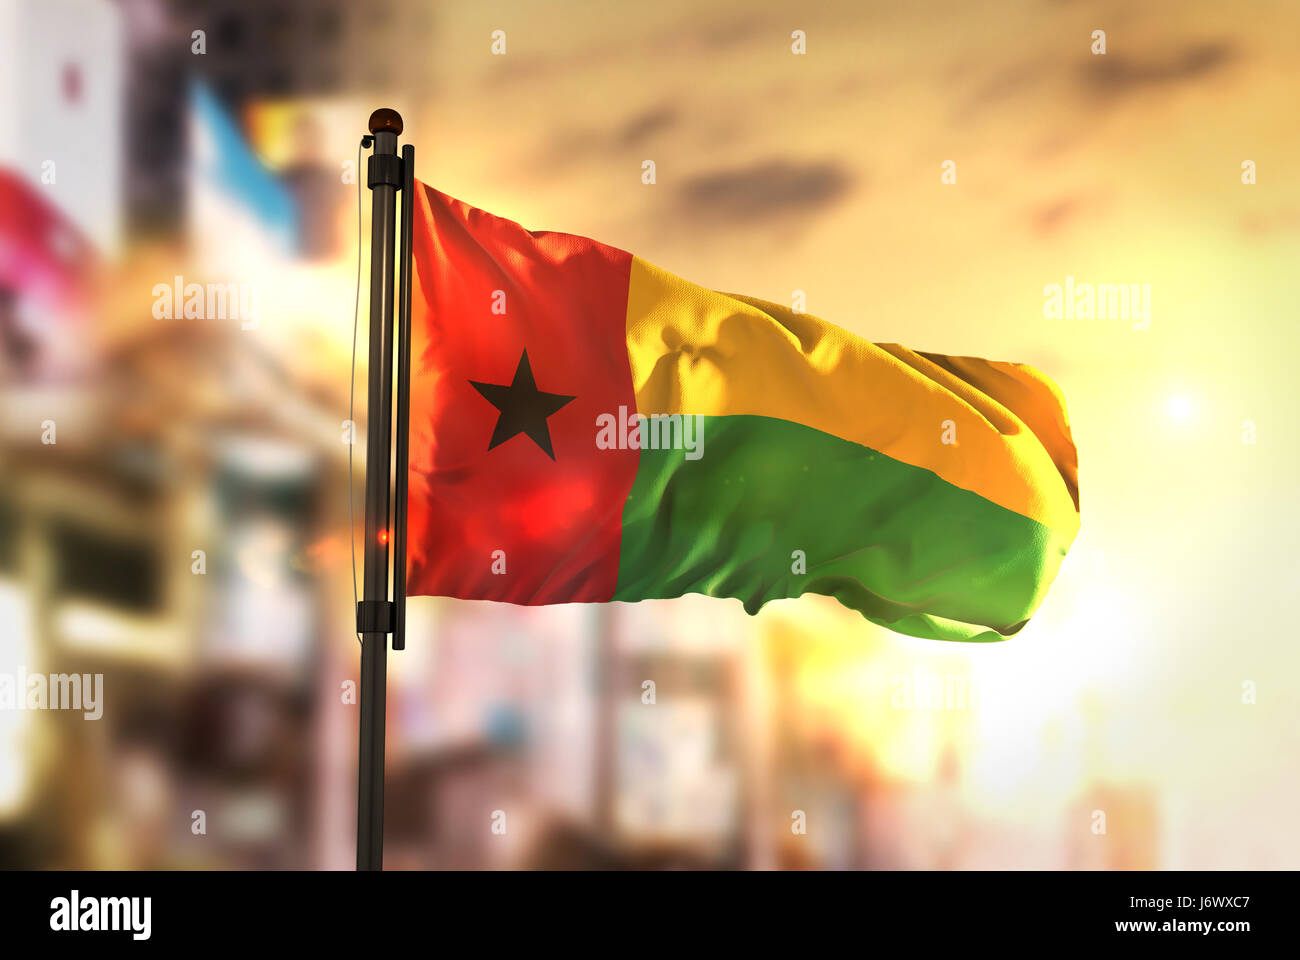 Guinea-Bissau Flag Against City Blurred Background At Sunrise Backlight Stock Photo